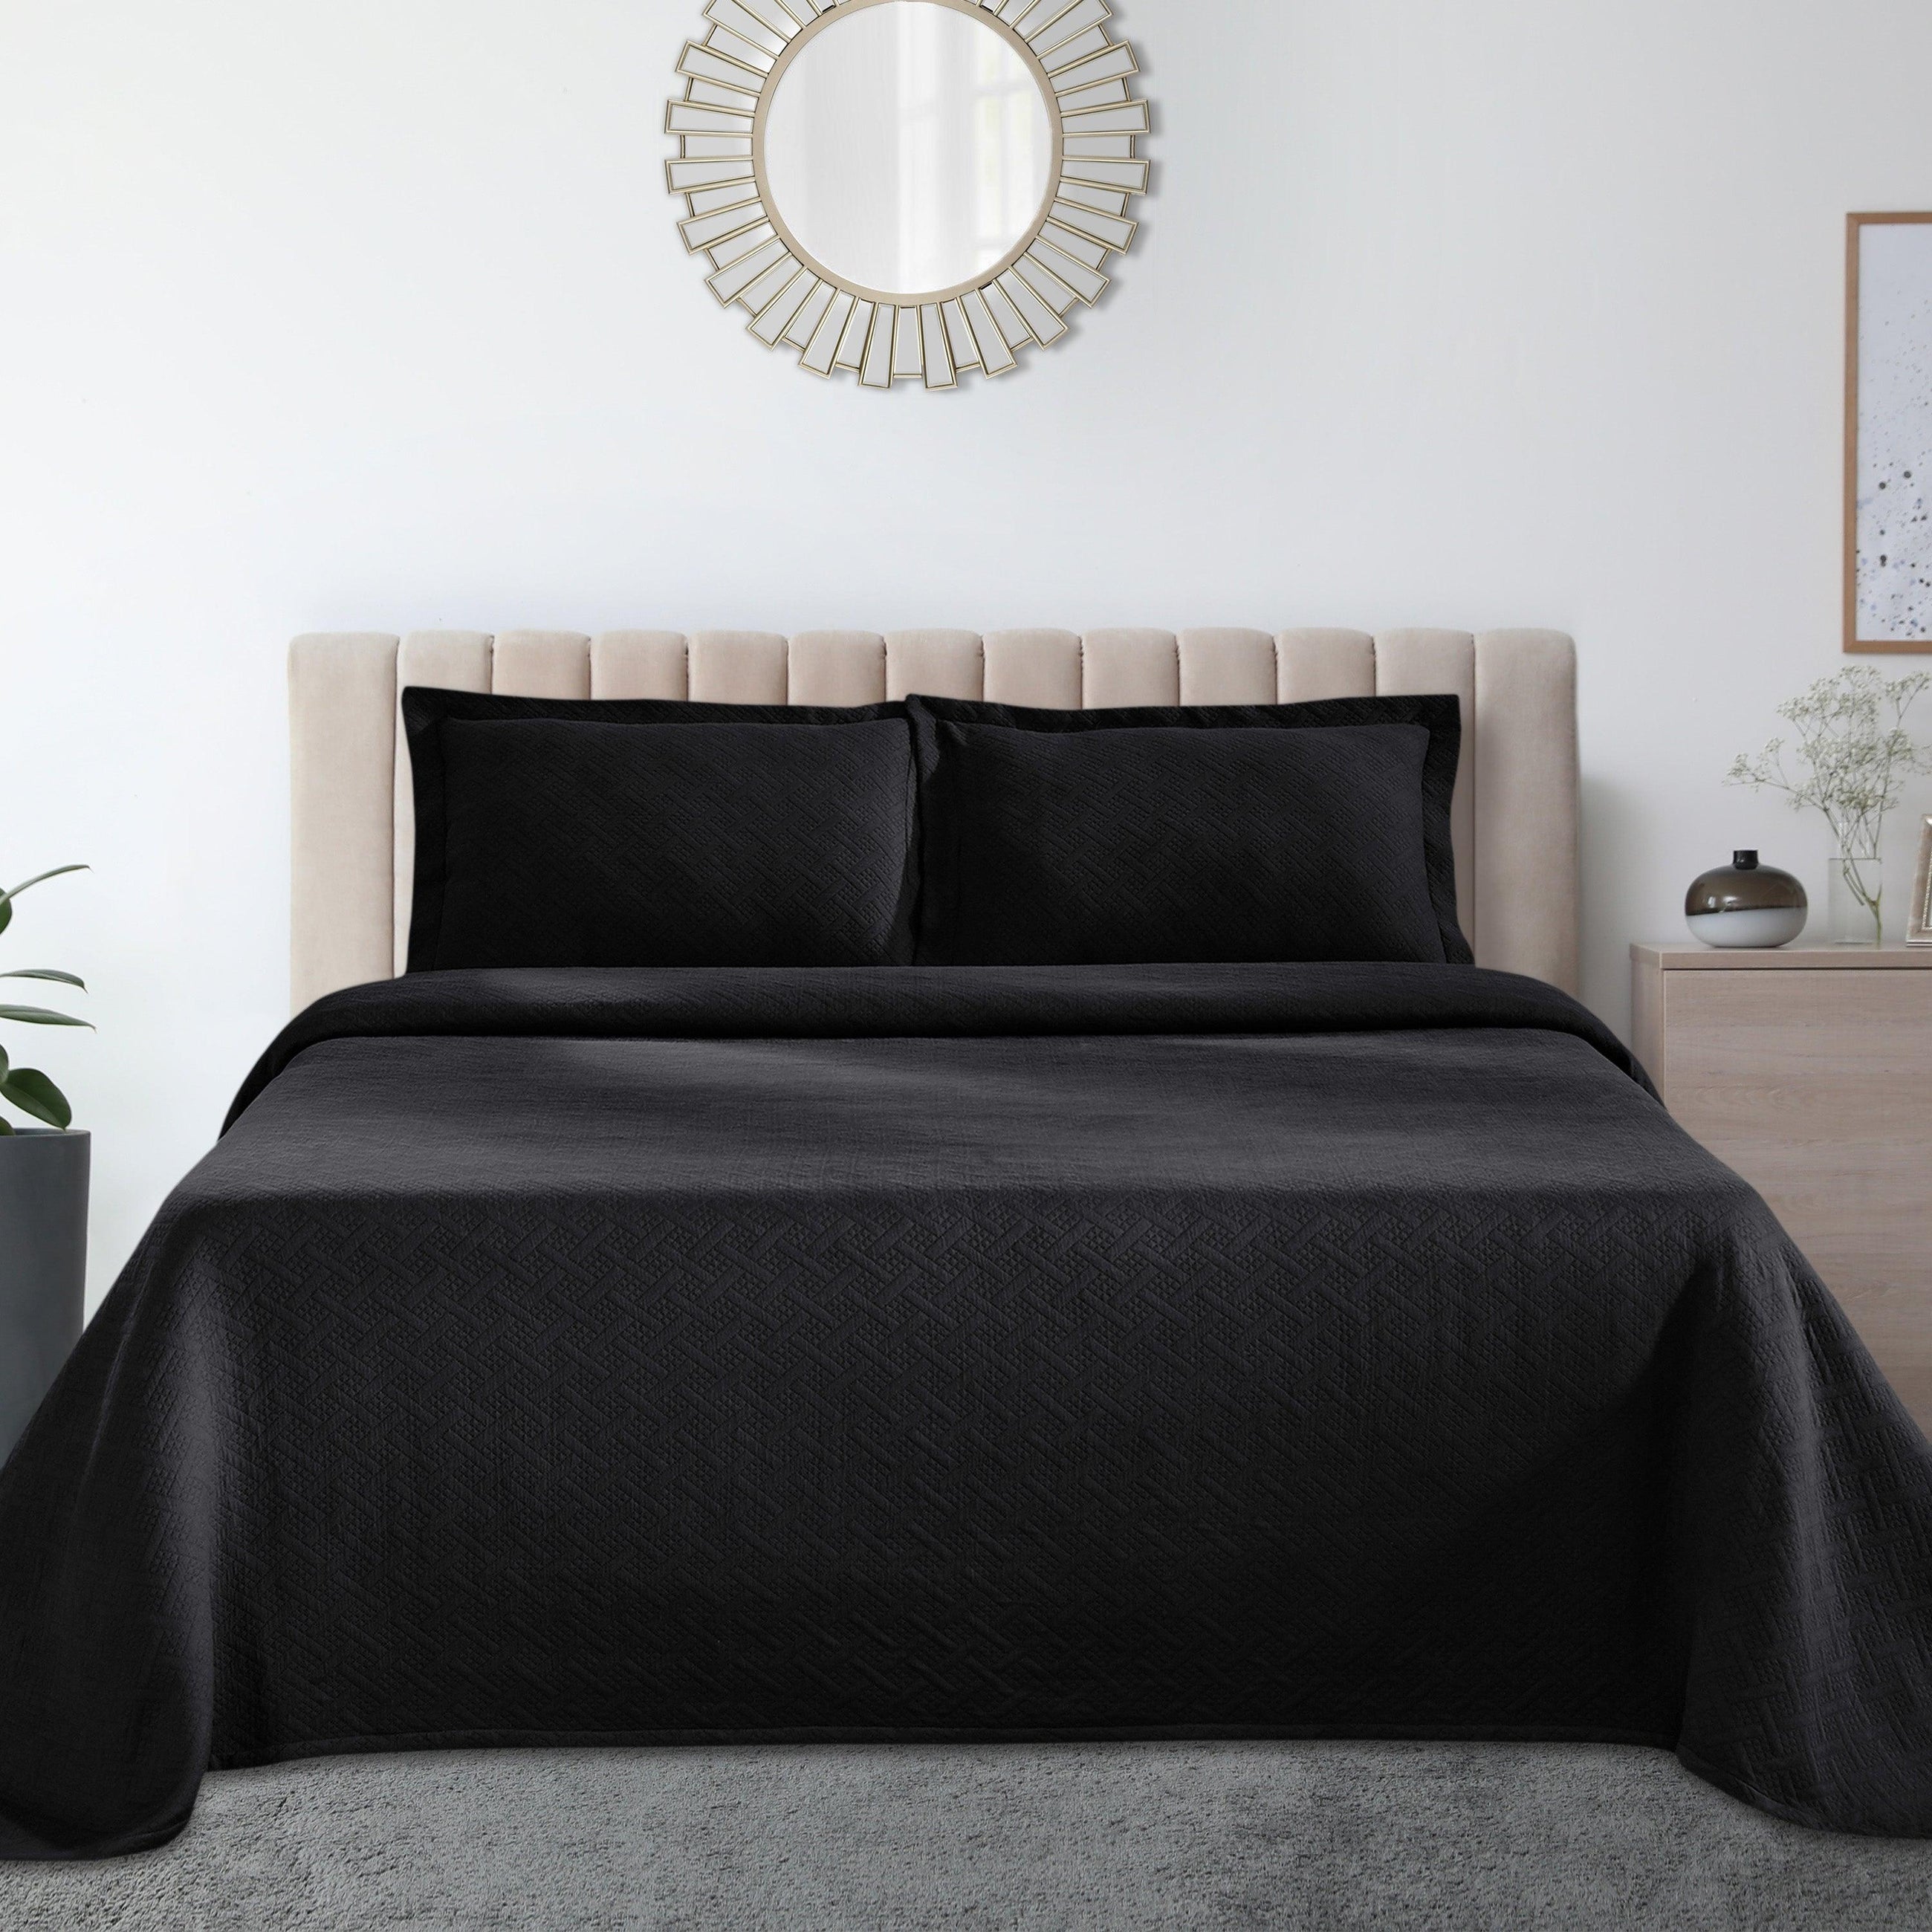 Utopia Bedding Twin XL Sheet Set (Quatrefoil Grey) - 1 Fitted Sheet, 1 Flat